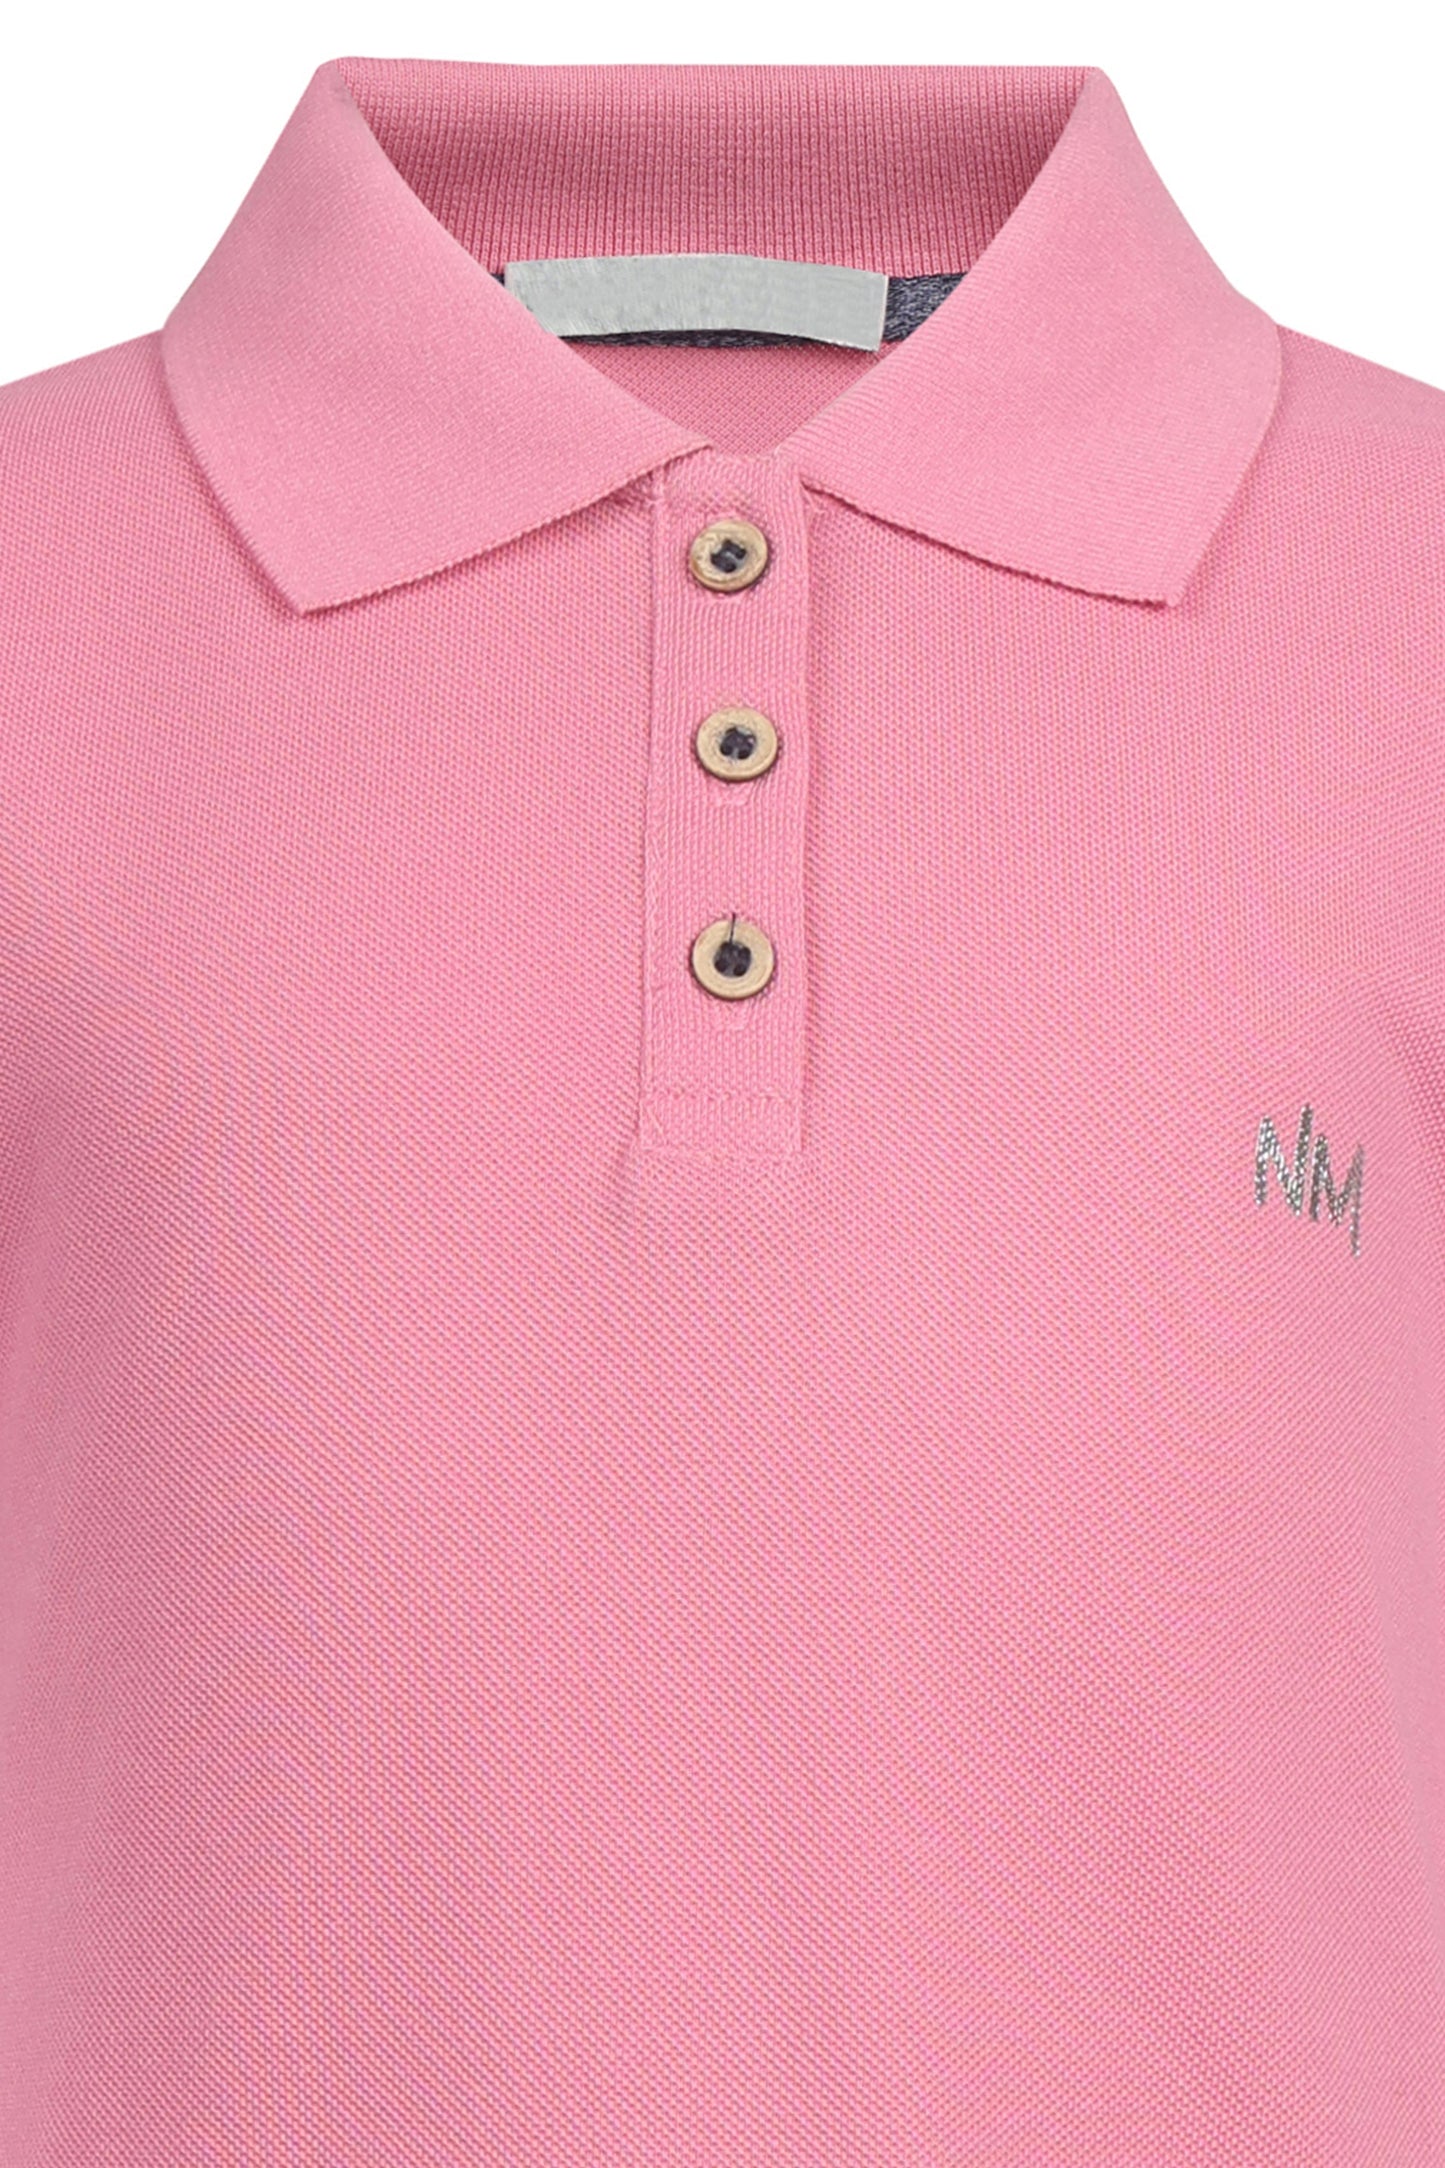 Pampolina Girls  Solid Pique Kint  Collar T-Shirt - Pink